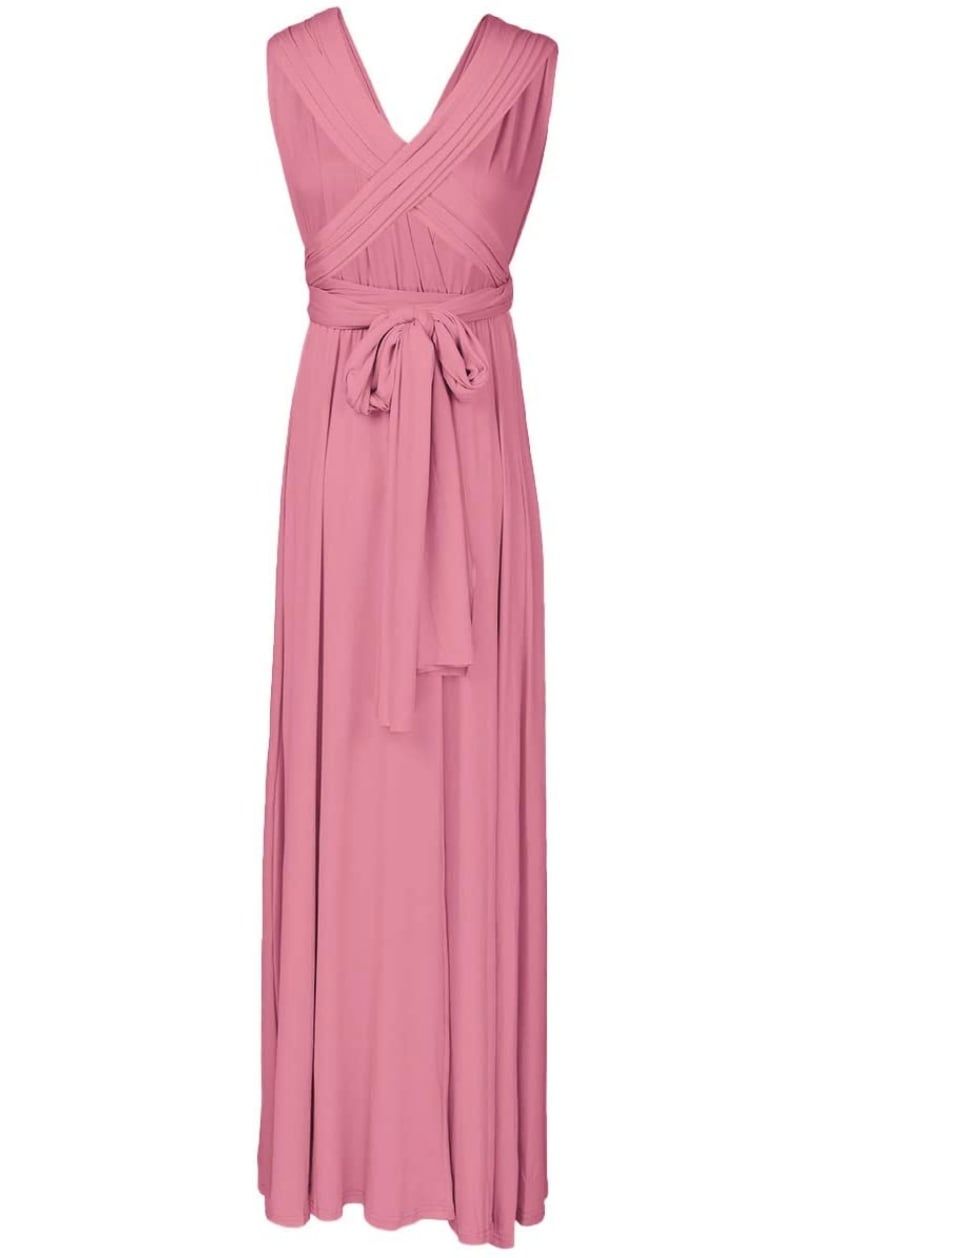 Style B073CGBPLG IWEMEK Size 8 Bridesmaid Pink Floor Length Maxi on Queenly